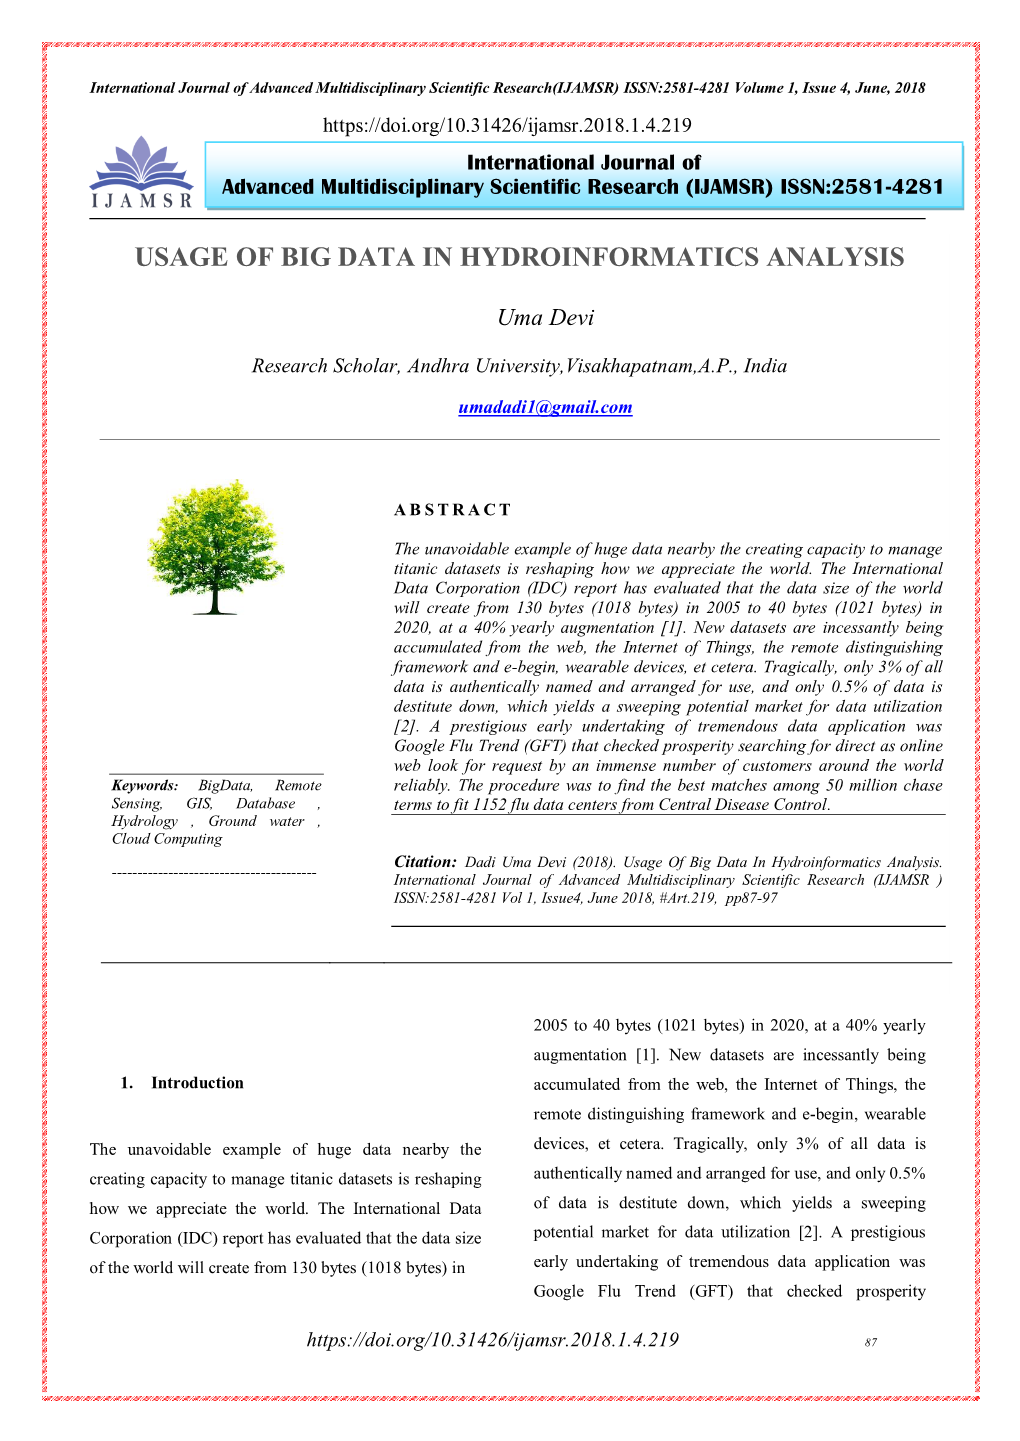 Usage of Big Data in Hydroinformatics Analysis